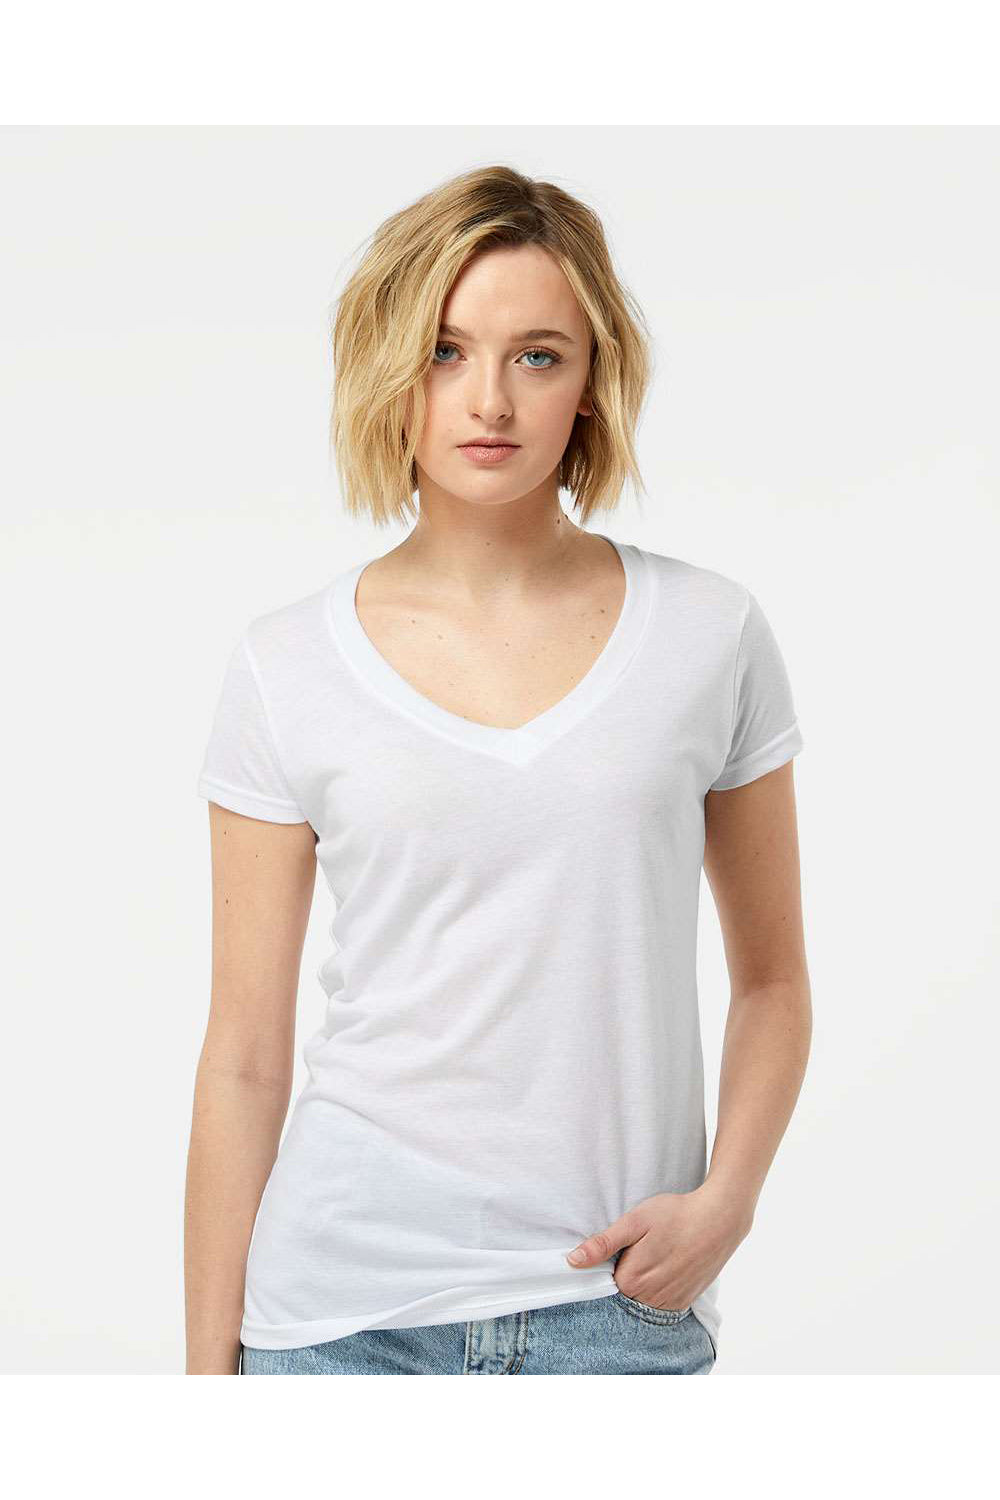 Tultex 244 Womens Poly-Rich Short Sleeve V-Neck T-Shirt White Model Front